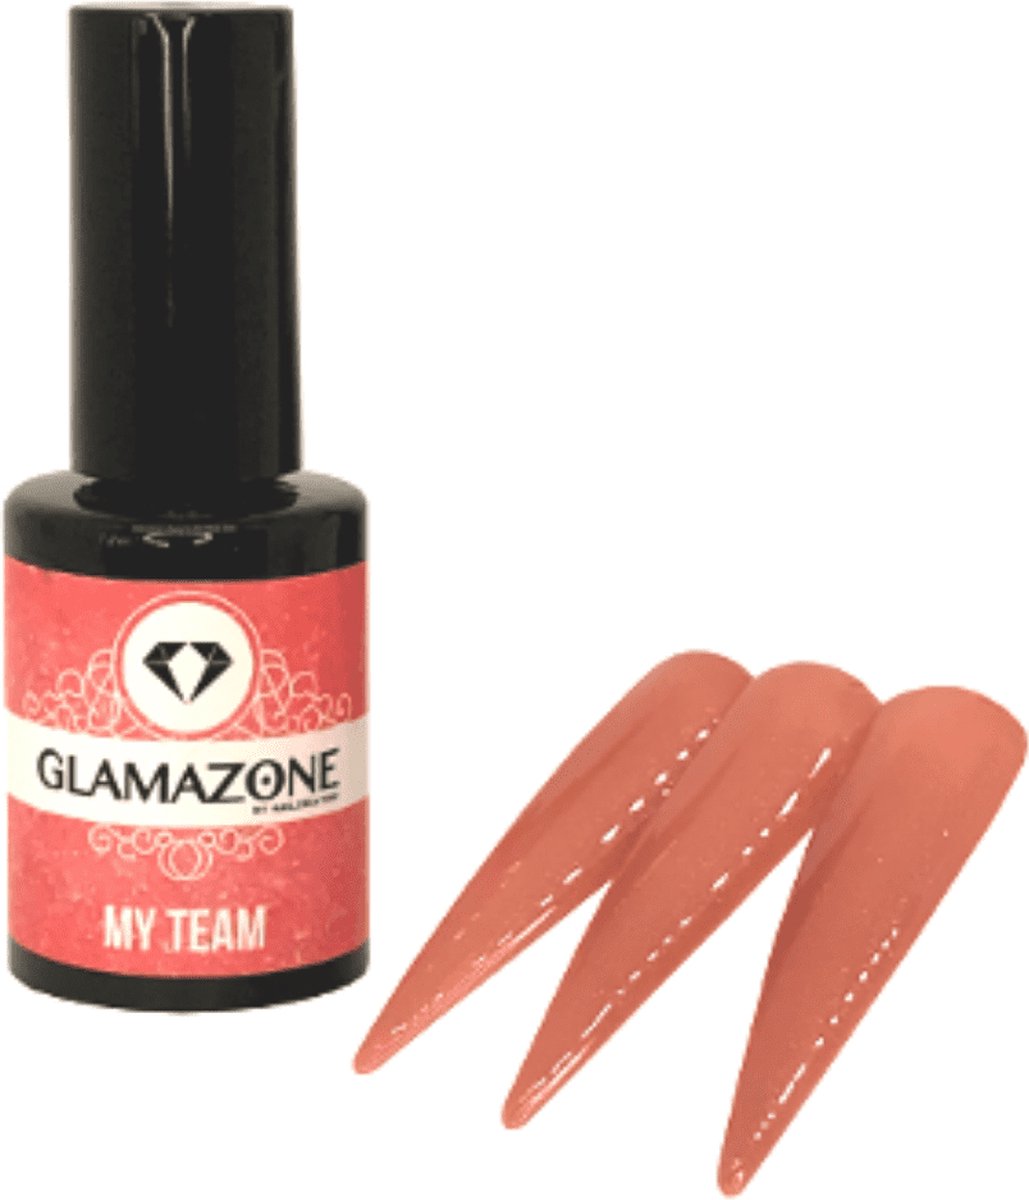 Nail Creation Glamazone - My Team